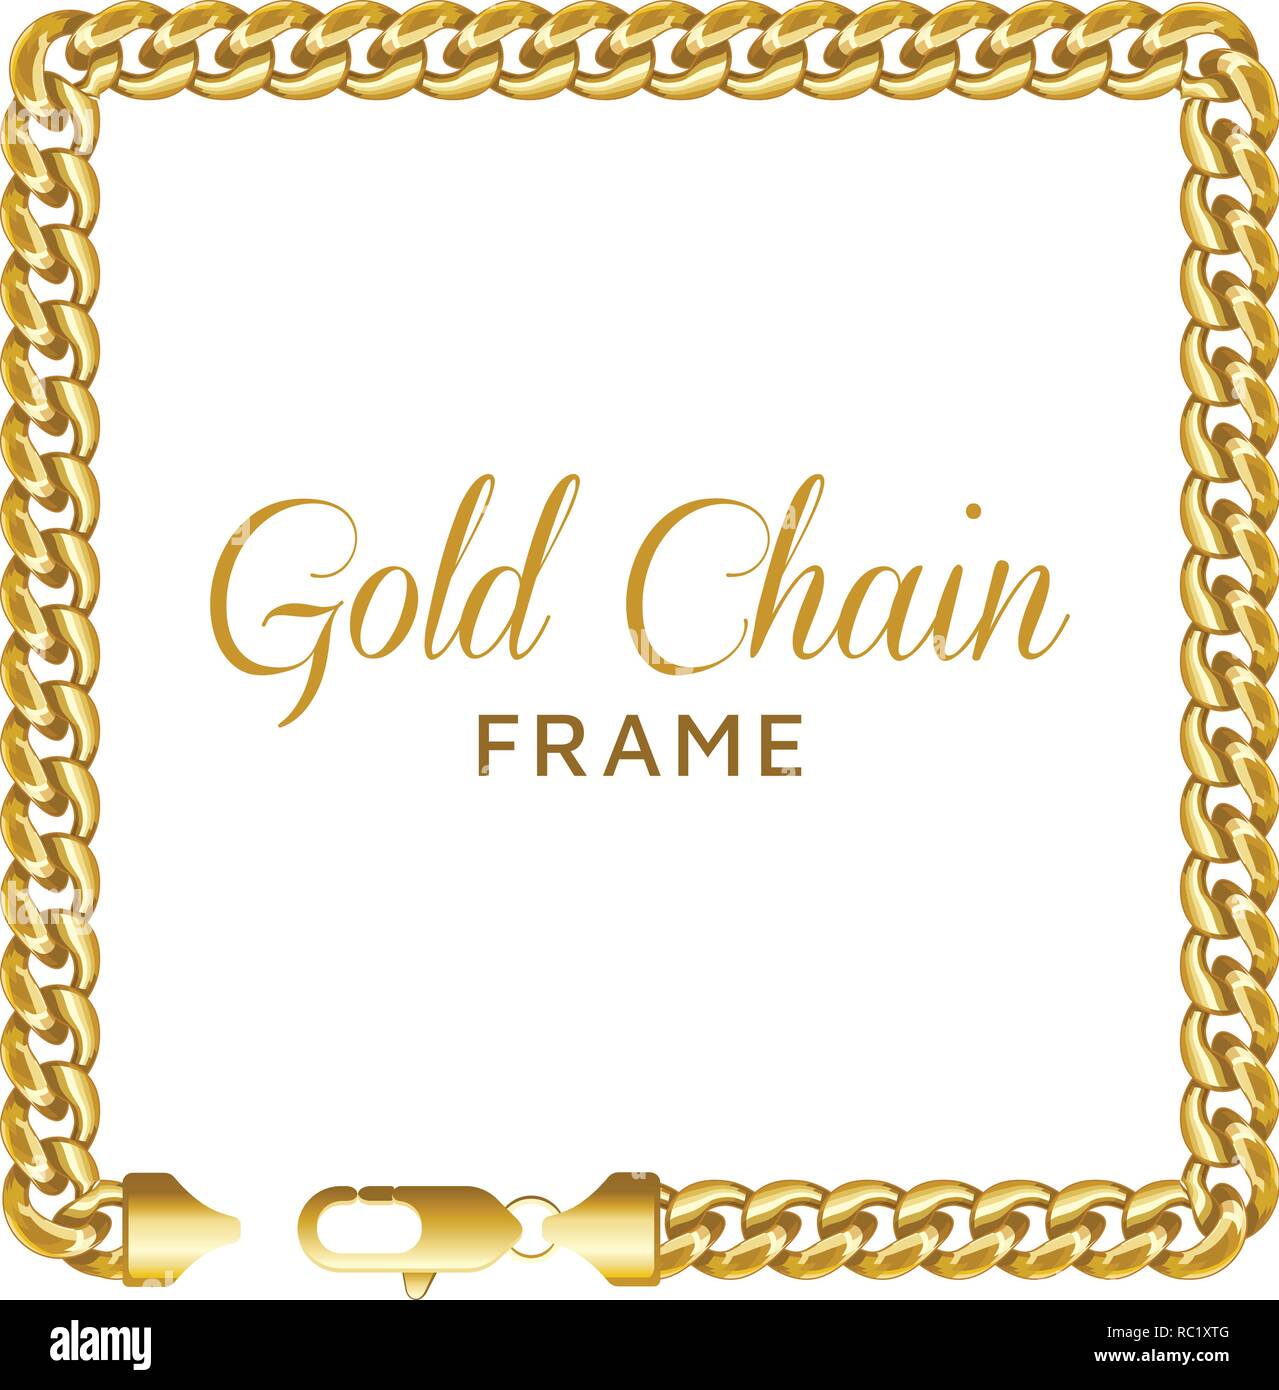 Gold chain square border frame. Rectangle wreath shape. Stock Vector